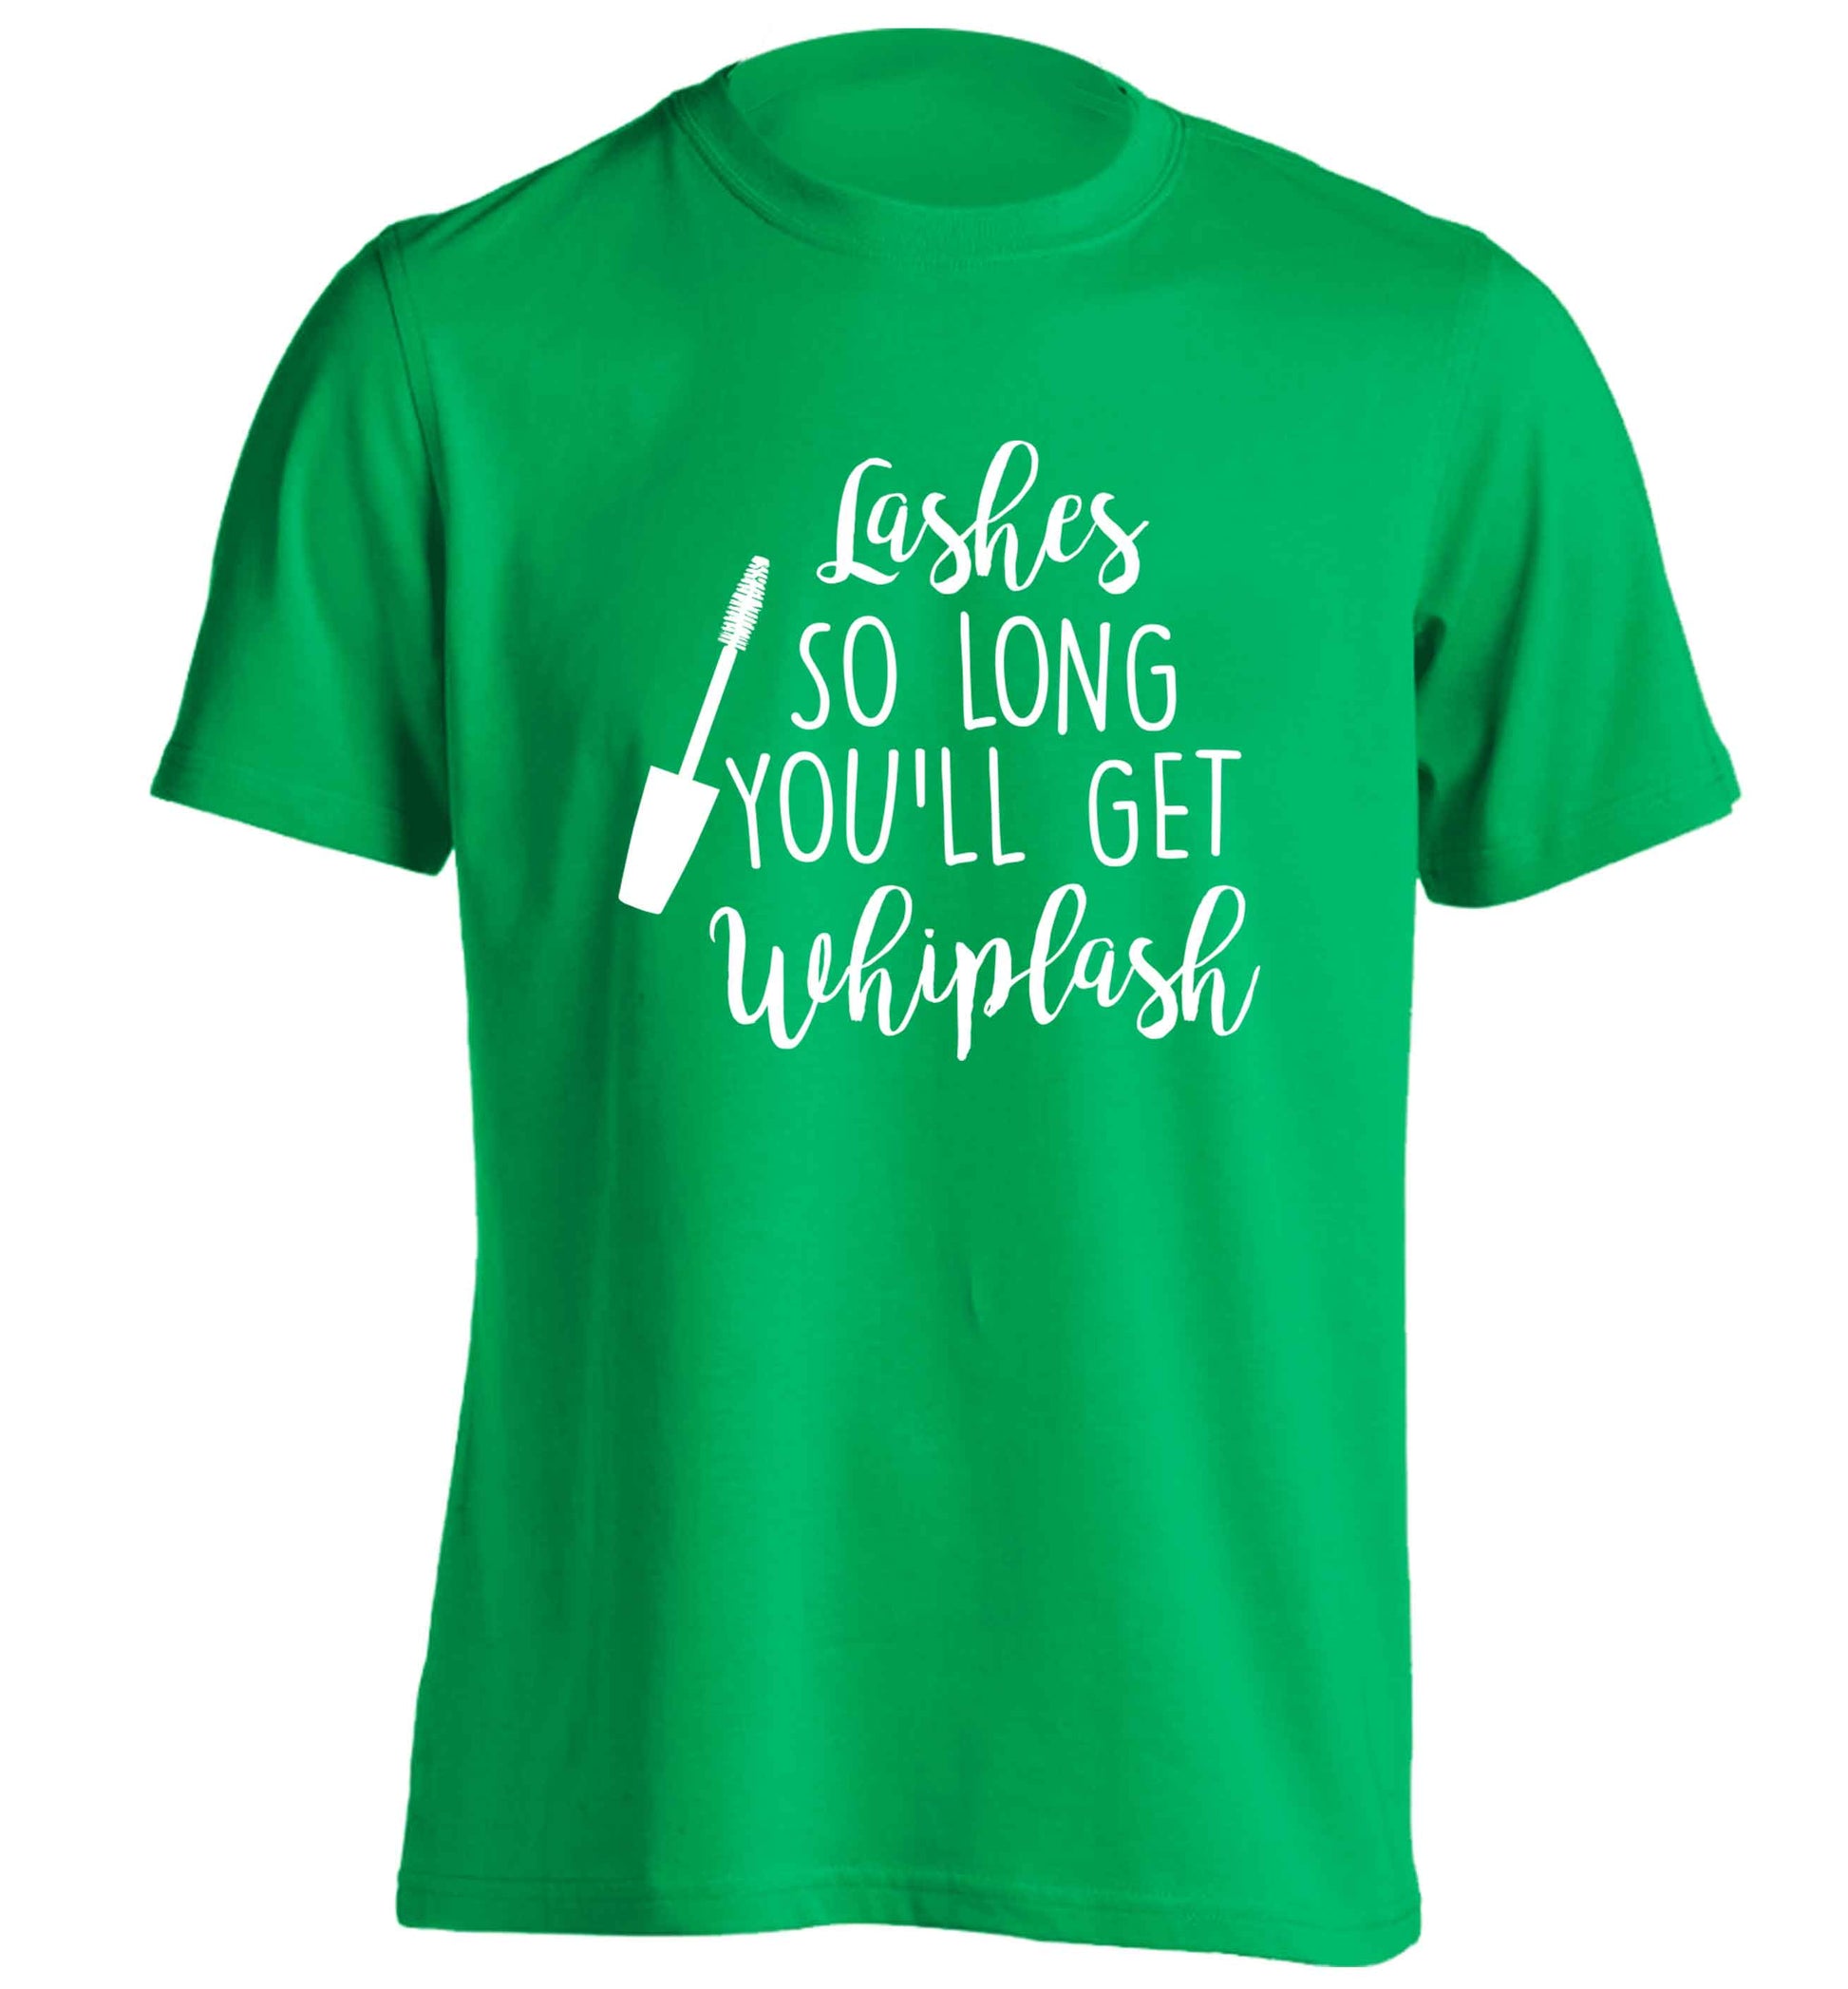 Lashes so long you'll get whiplash adults unisex green Tshirt 2XL